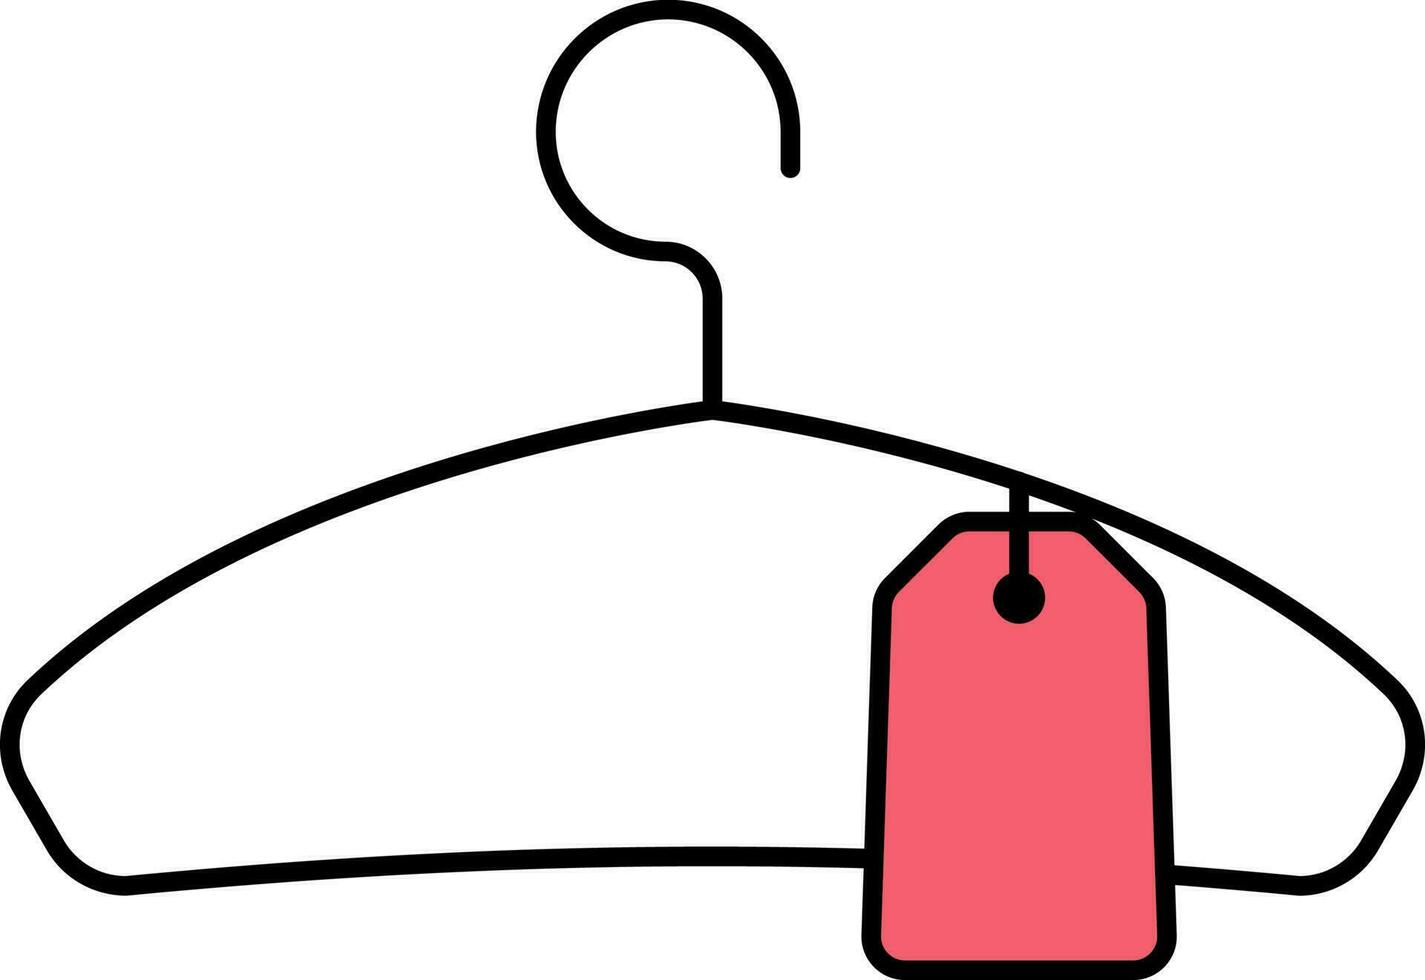 kleding hanger met etiket icoon in rood en zwart kleur. vector